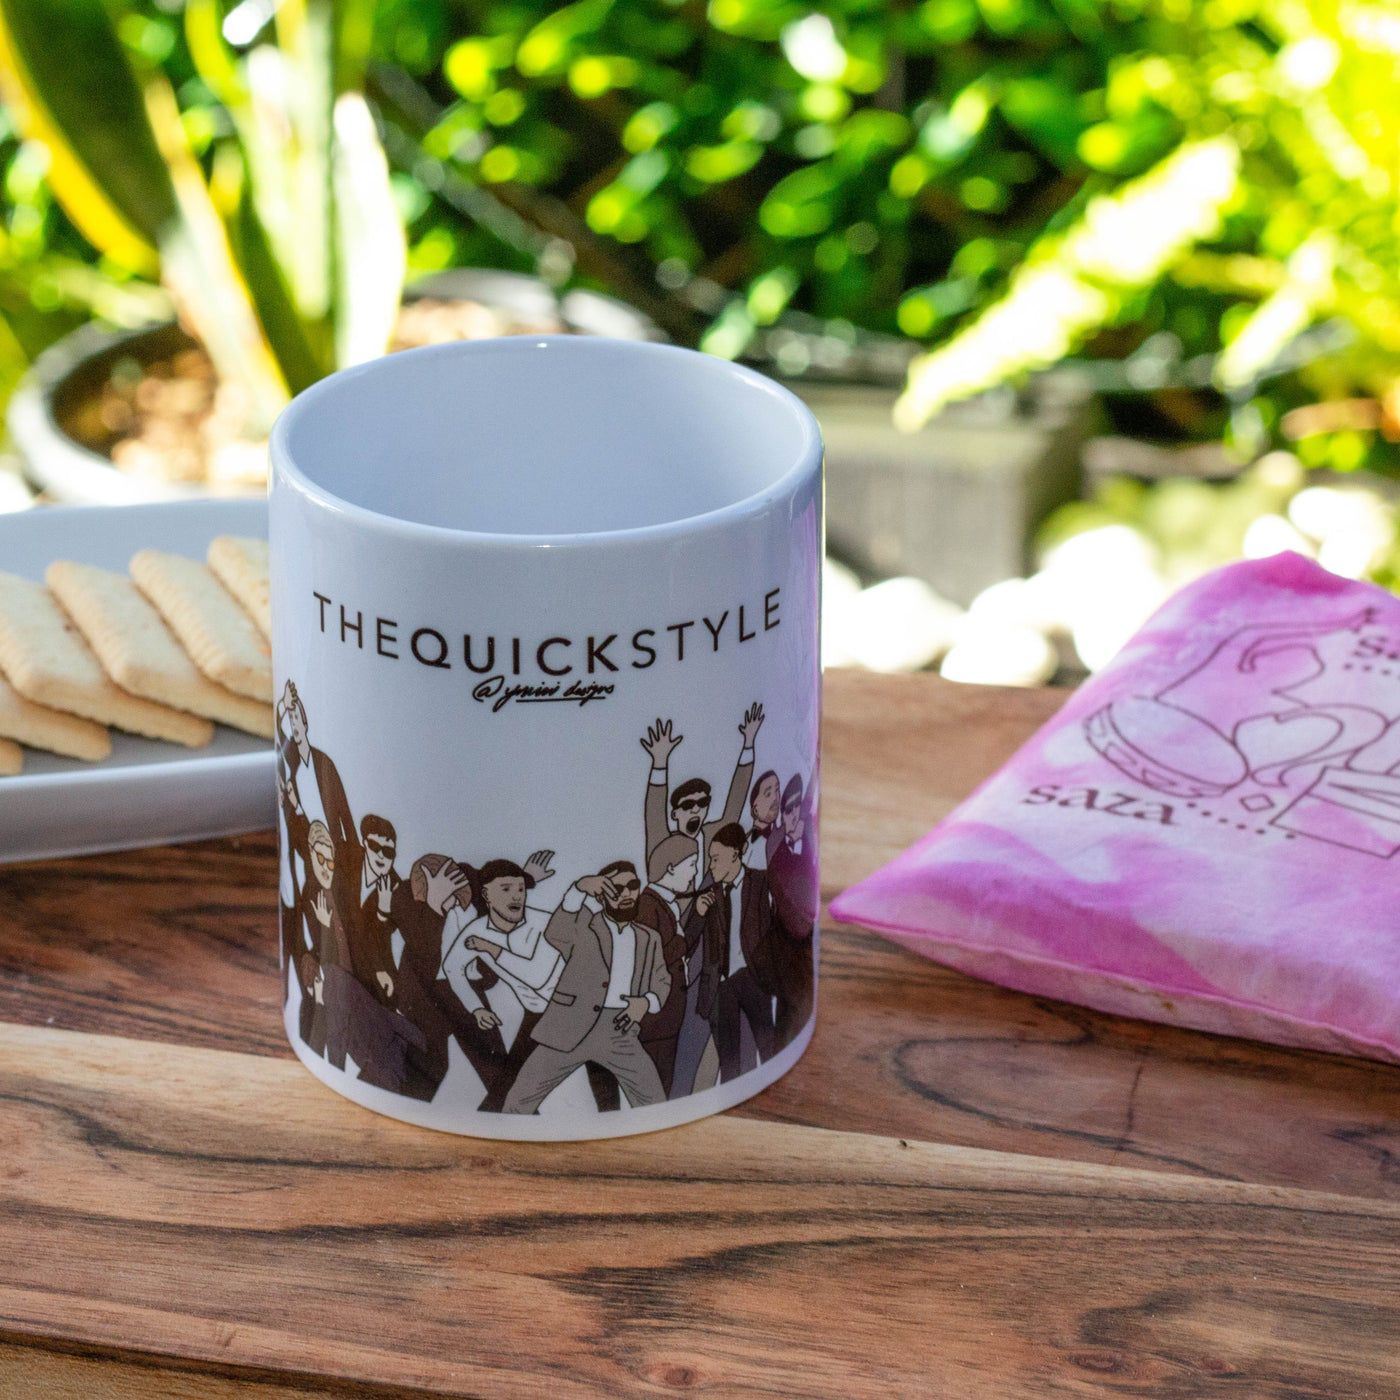 The quickstyle crew mug by Ymini Designs